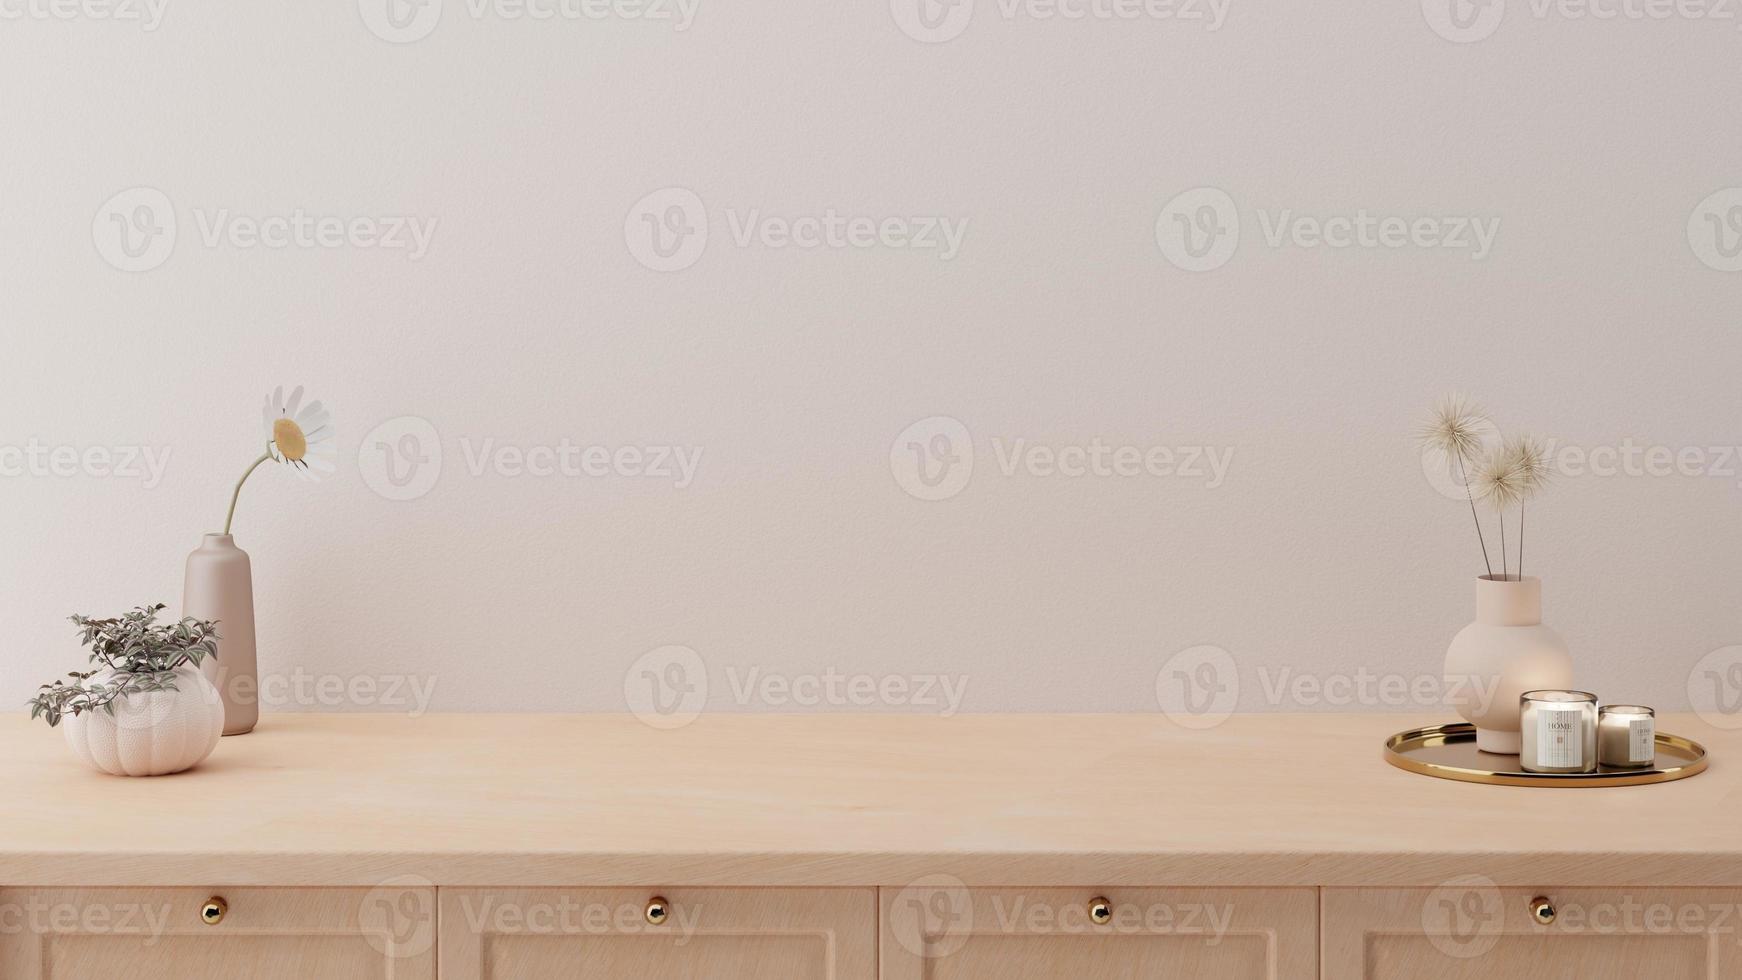 minimale teller mockup achtergrond in japanse stijl met heldere houten toonbank en warme witte muur. keuken interieur. foto